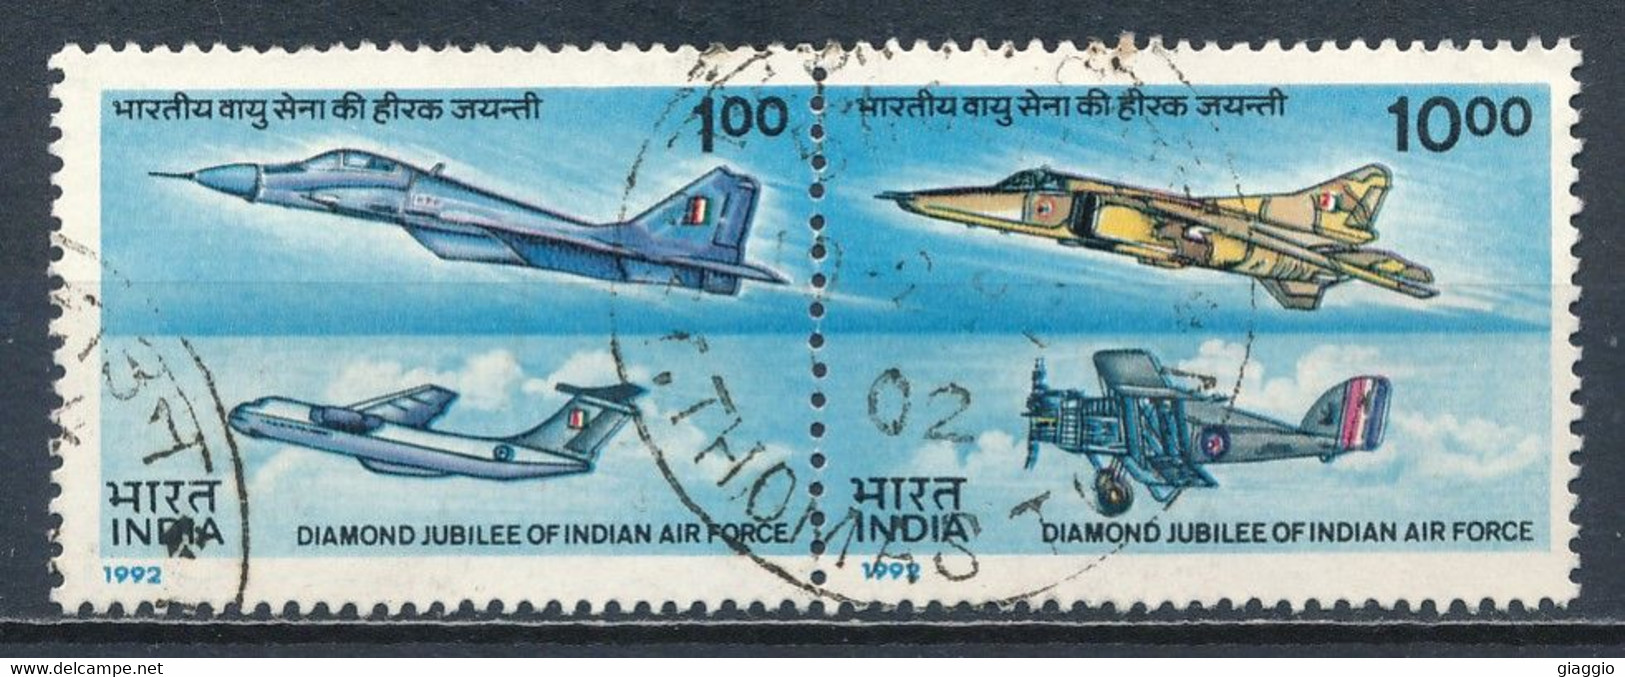 °°° INDIA - Y&T N°1164/65 - 1992 °°° - Used Stamps